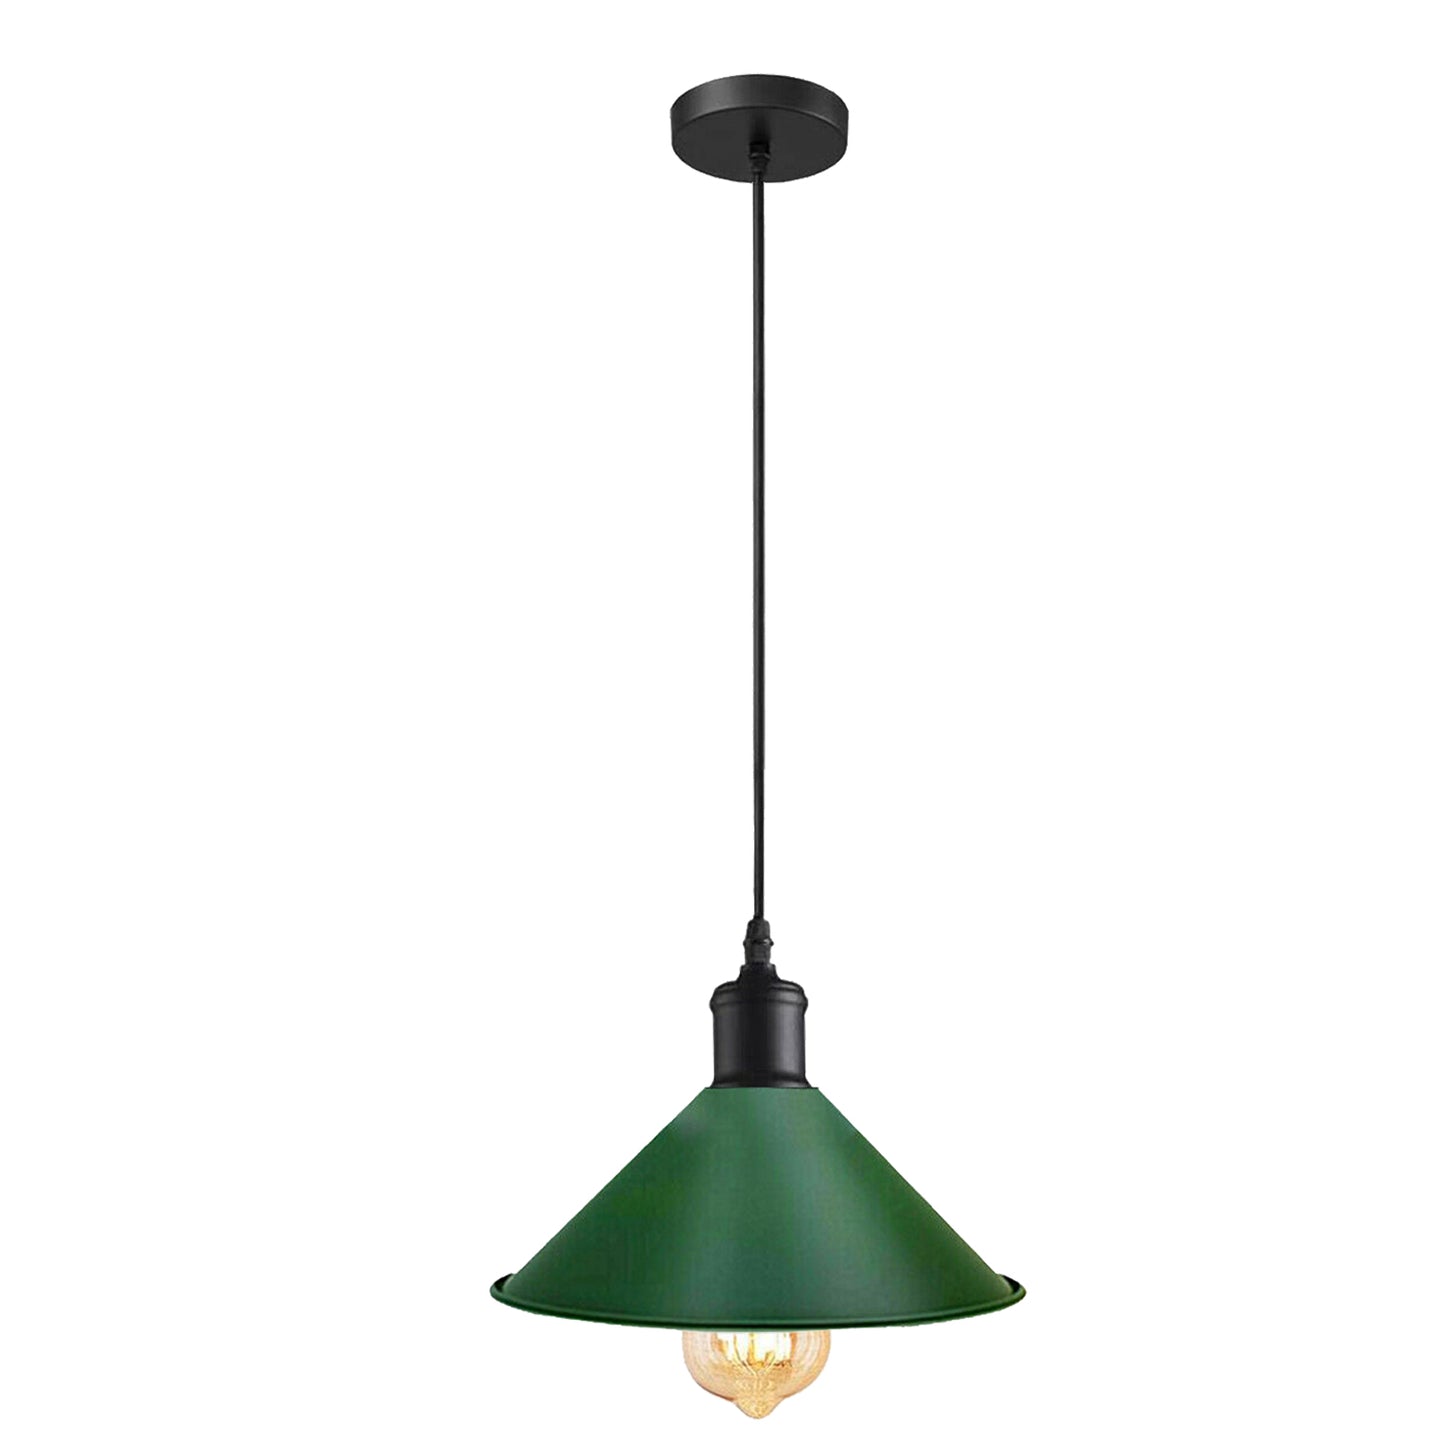 Grün-Industrie Vintage Lampe Retro Deckenlampe Pendelleuchte Kronleuchter E27 Edison